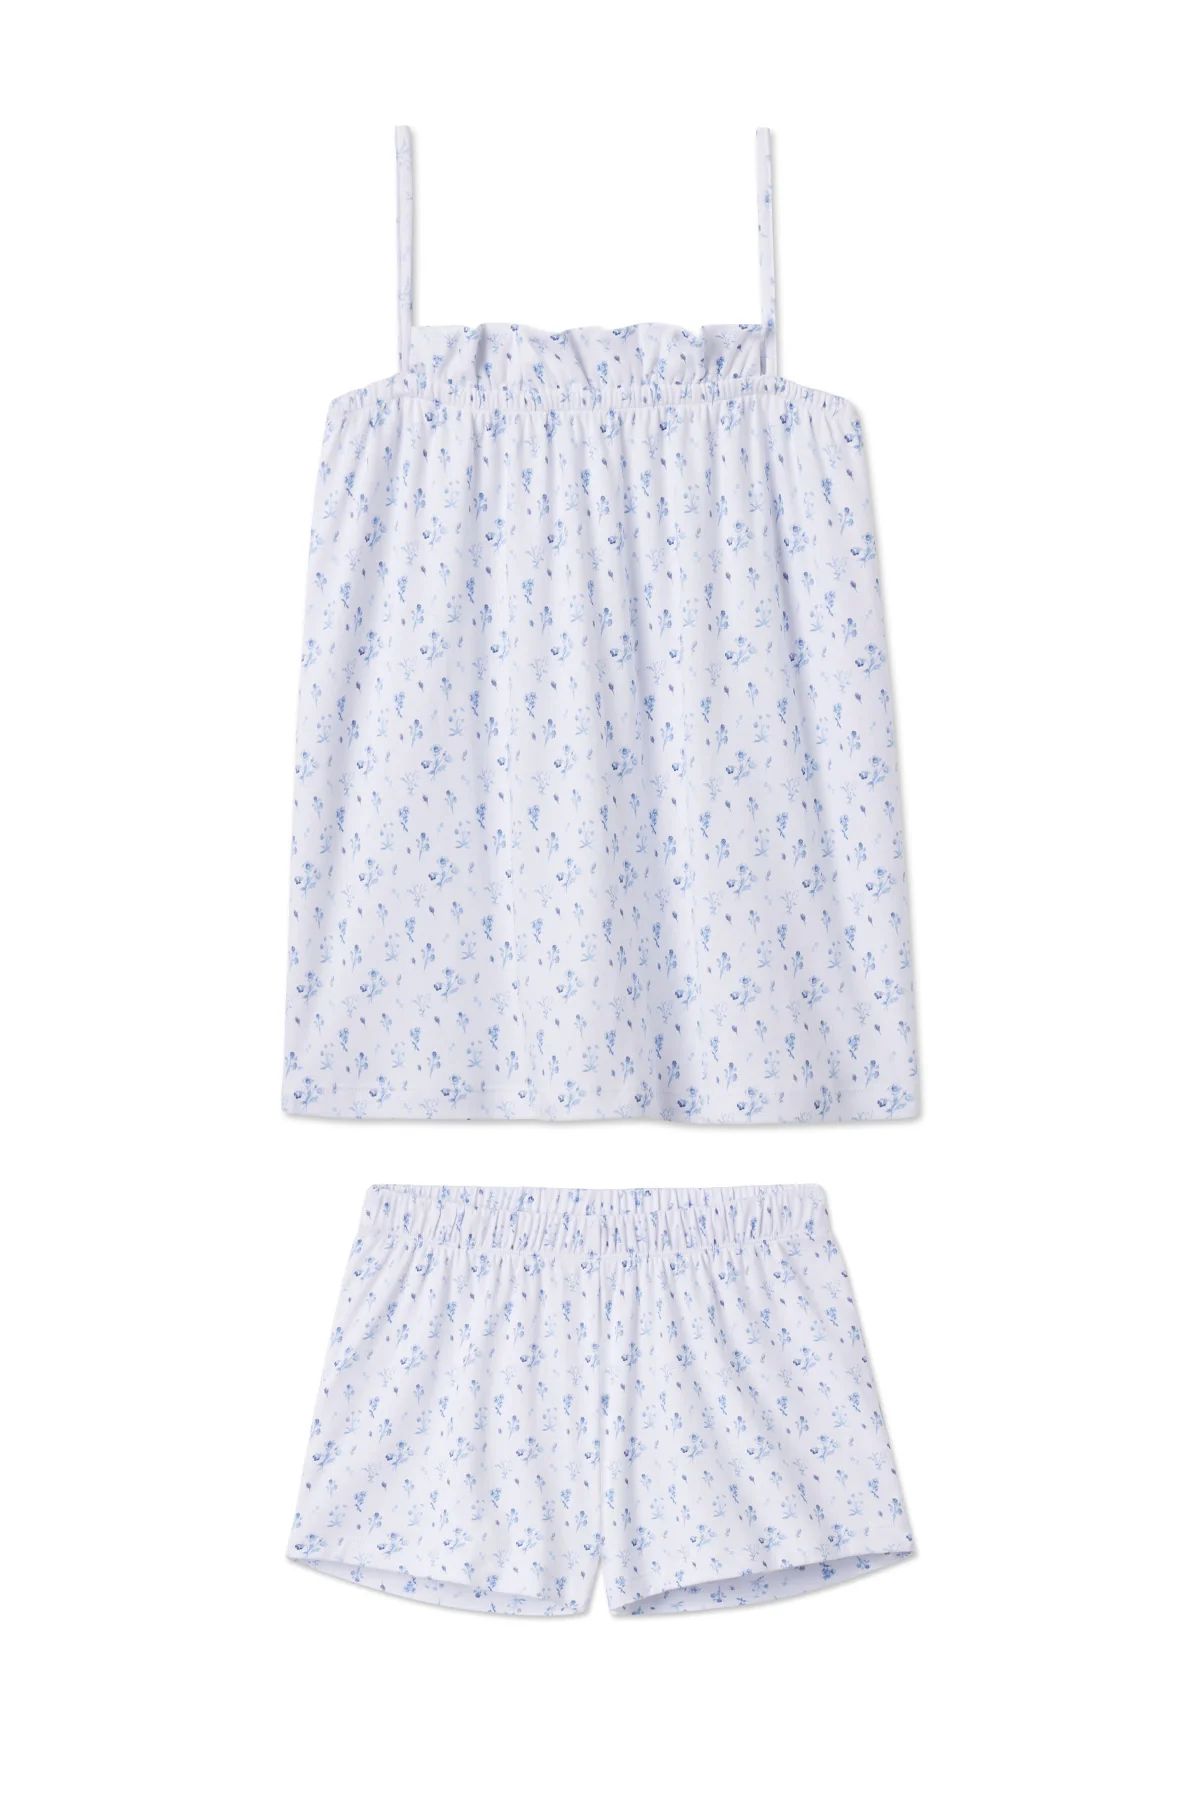 Pima Ruffle Shorts Set in French Blue Floral | Lake Pajamas